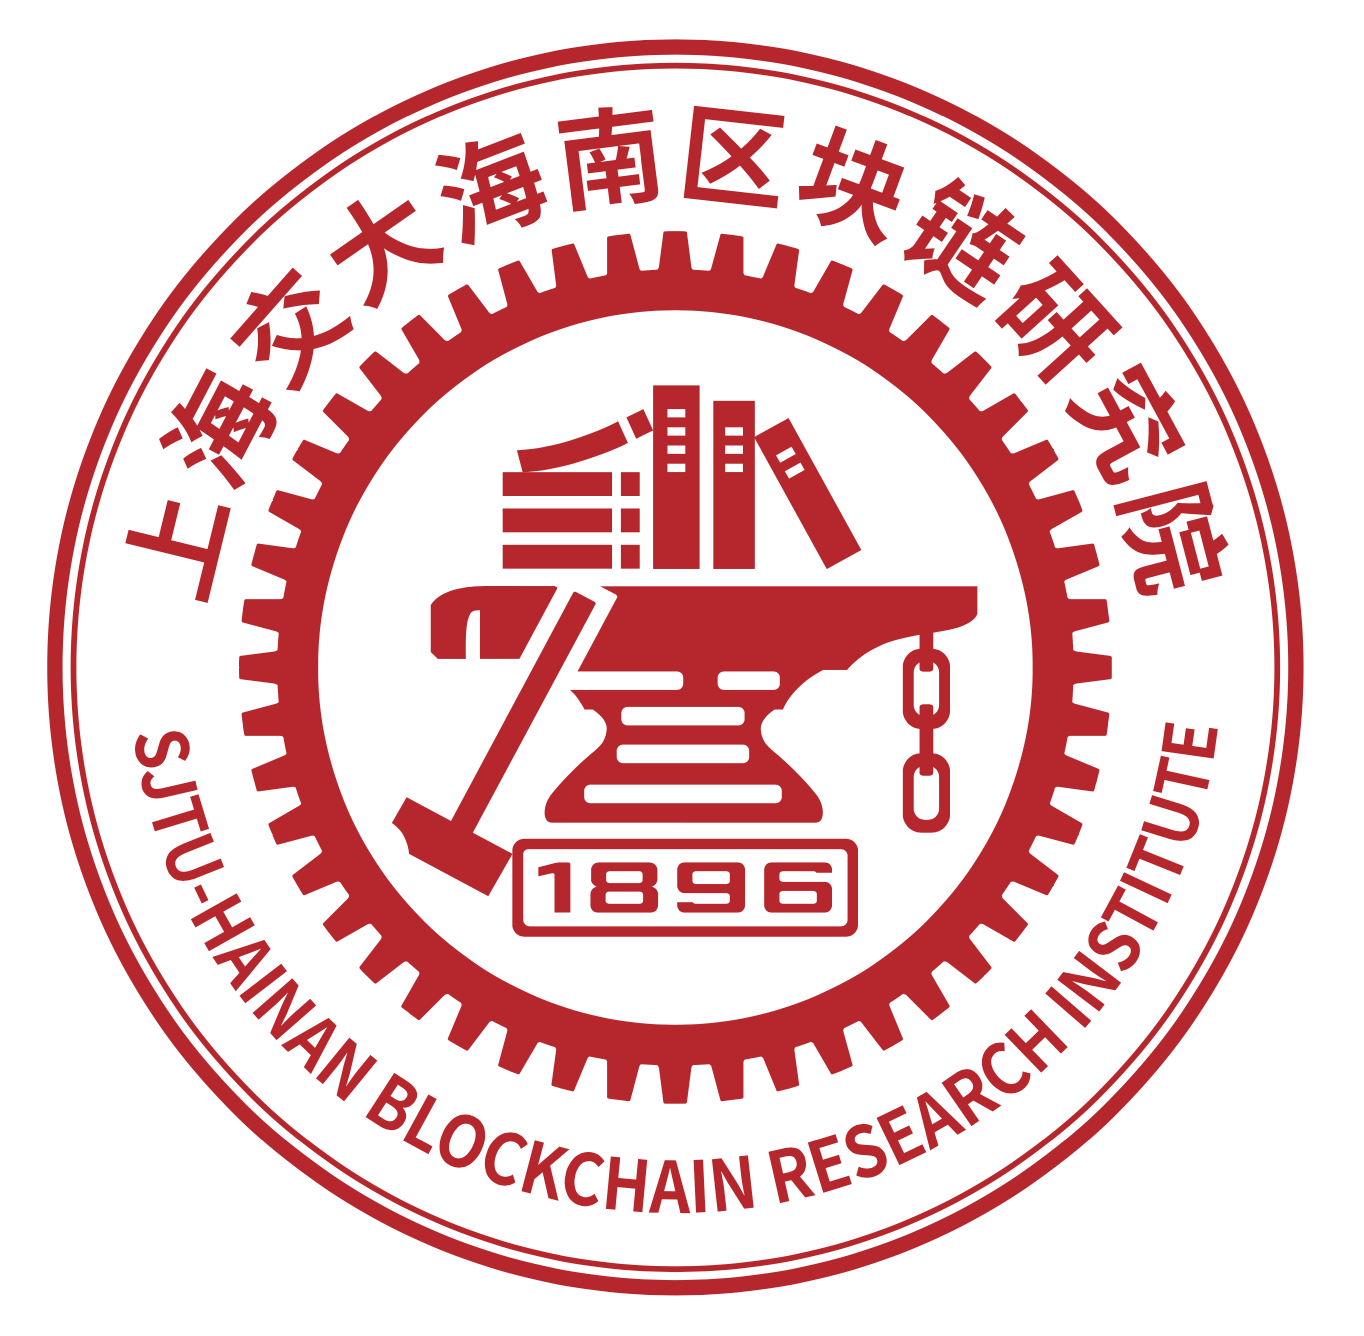 Shanghai Jiao Tong University - Hainan Blockchain Research Institute